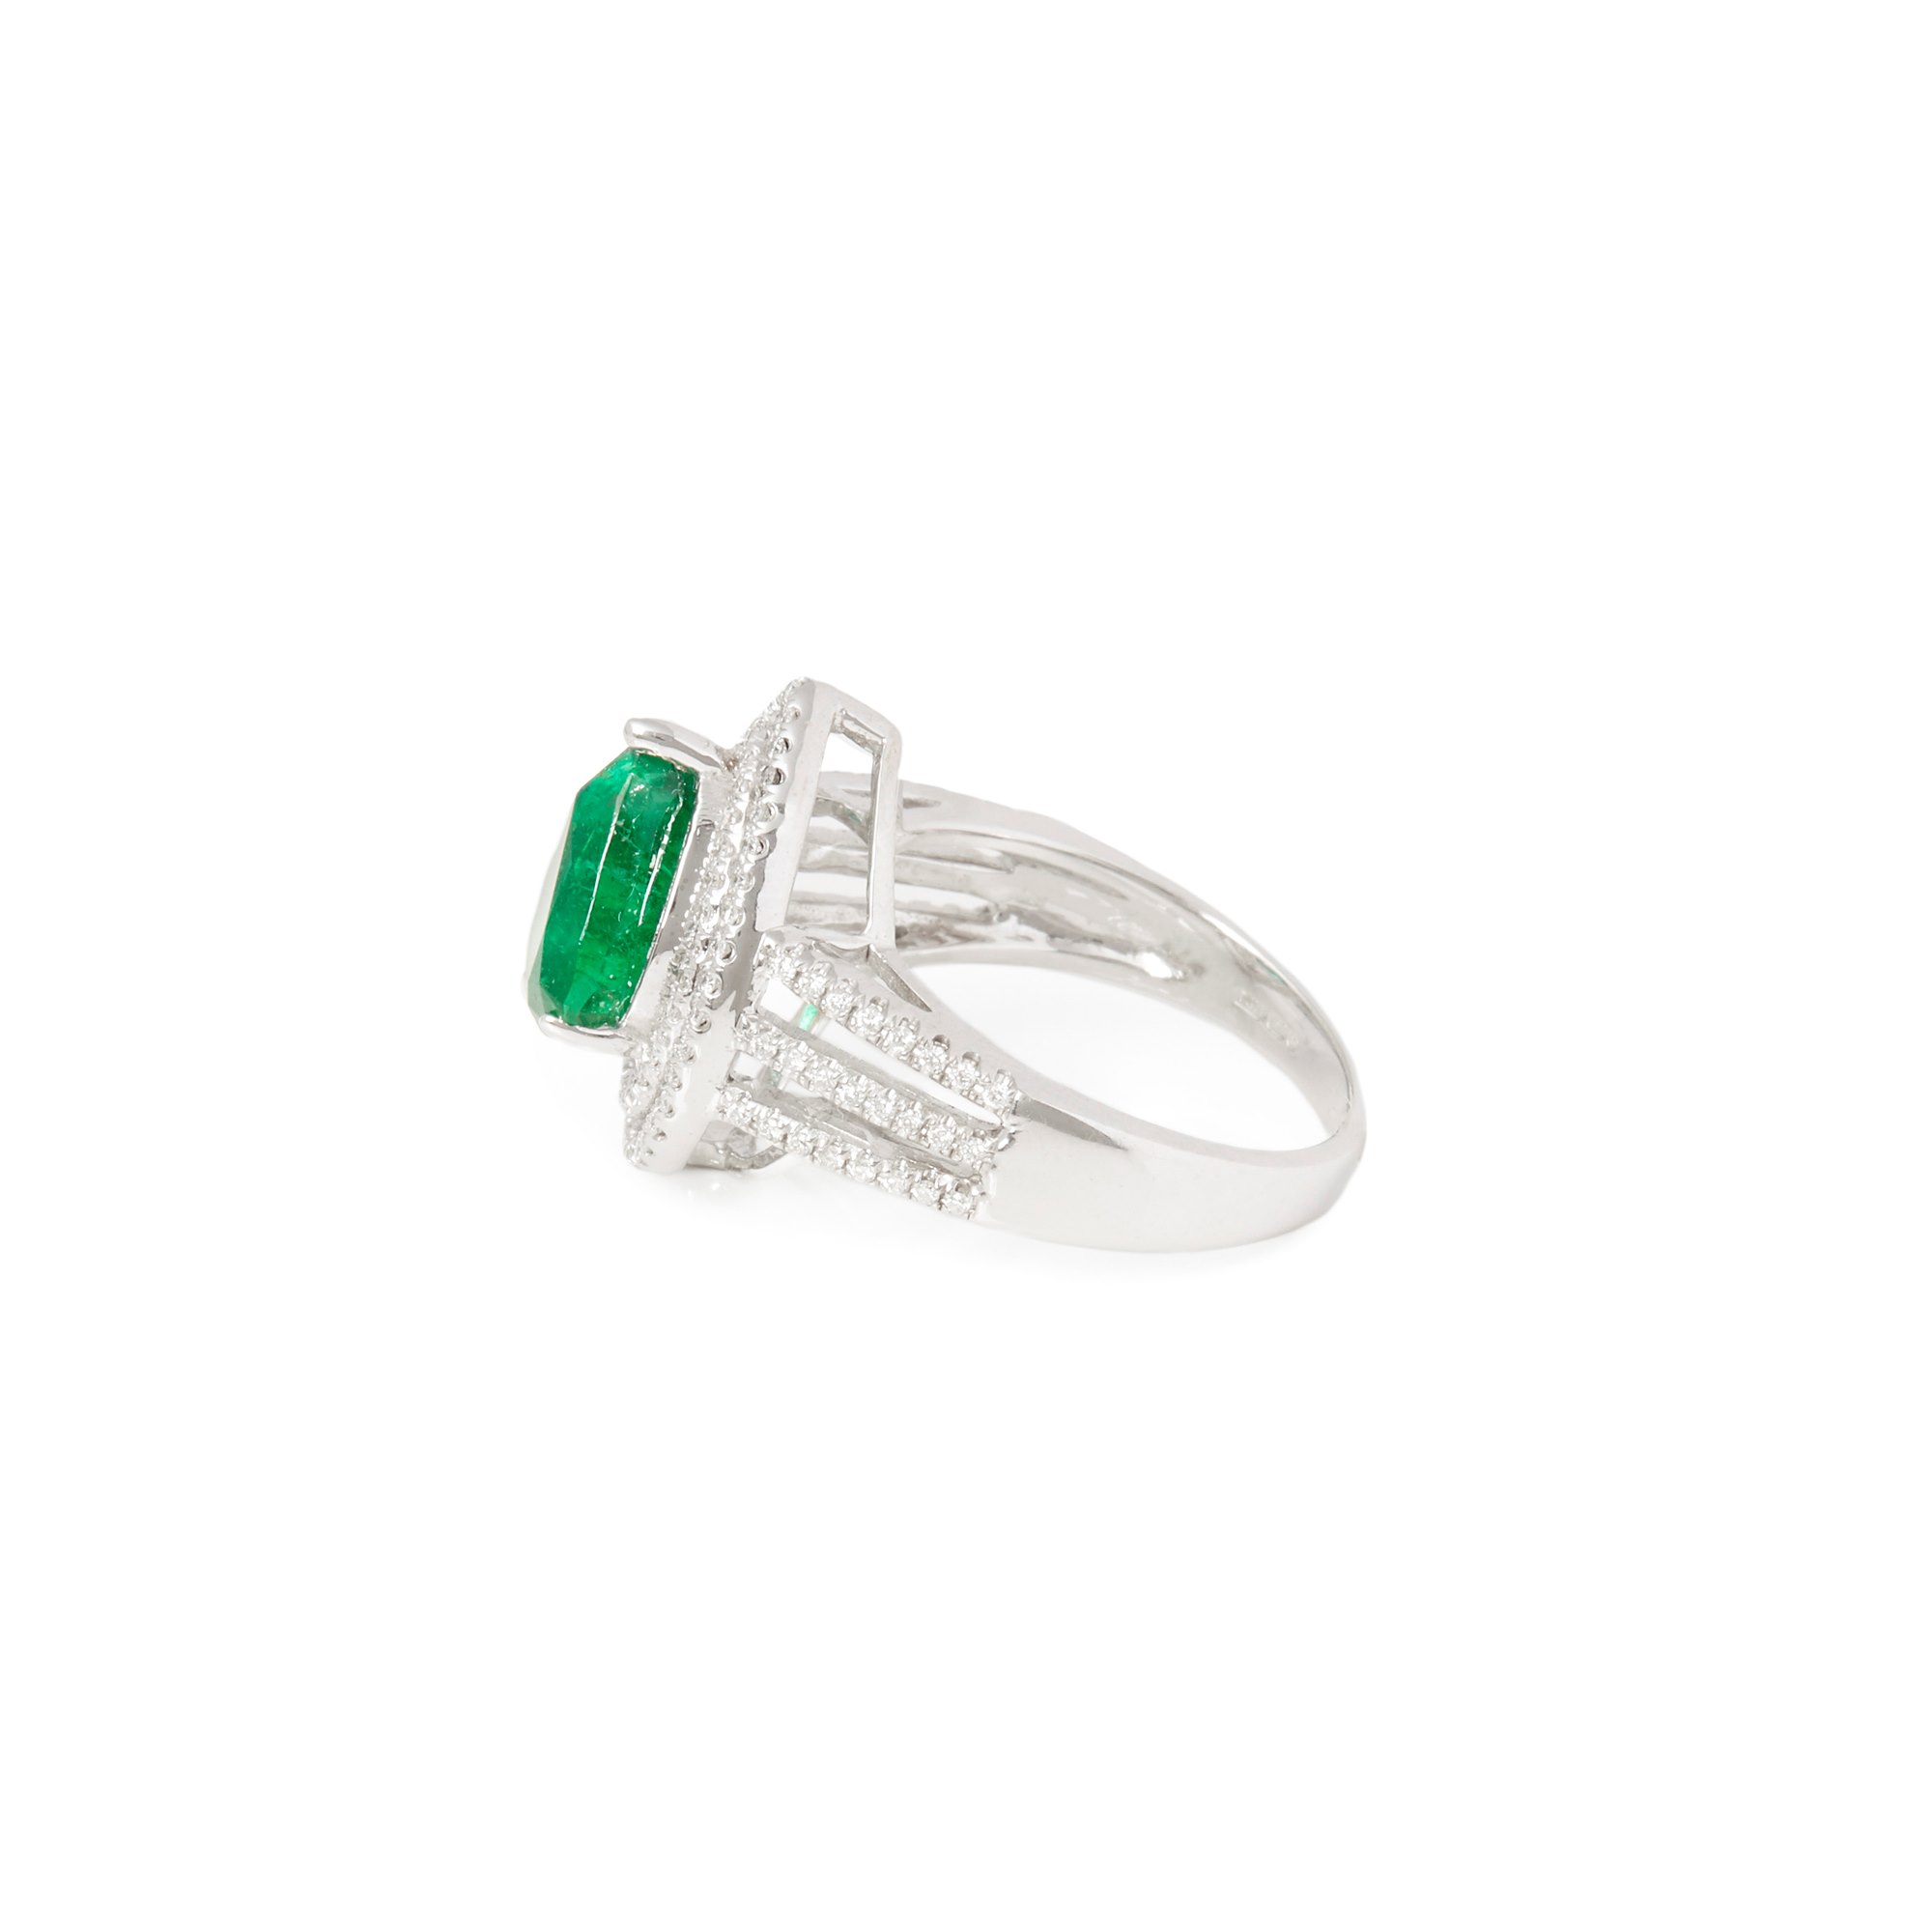 David Jerome Certified 3.68ct Untreated Zambian Pear Cut Emerald and Diamond 18ct Gold Ring